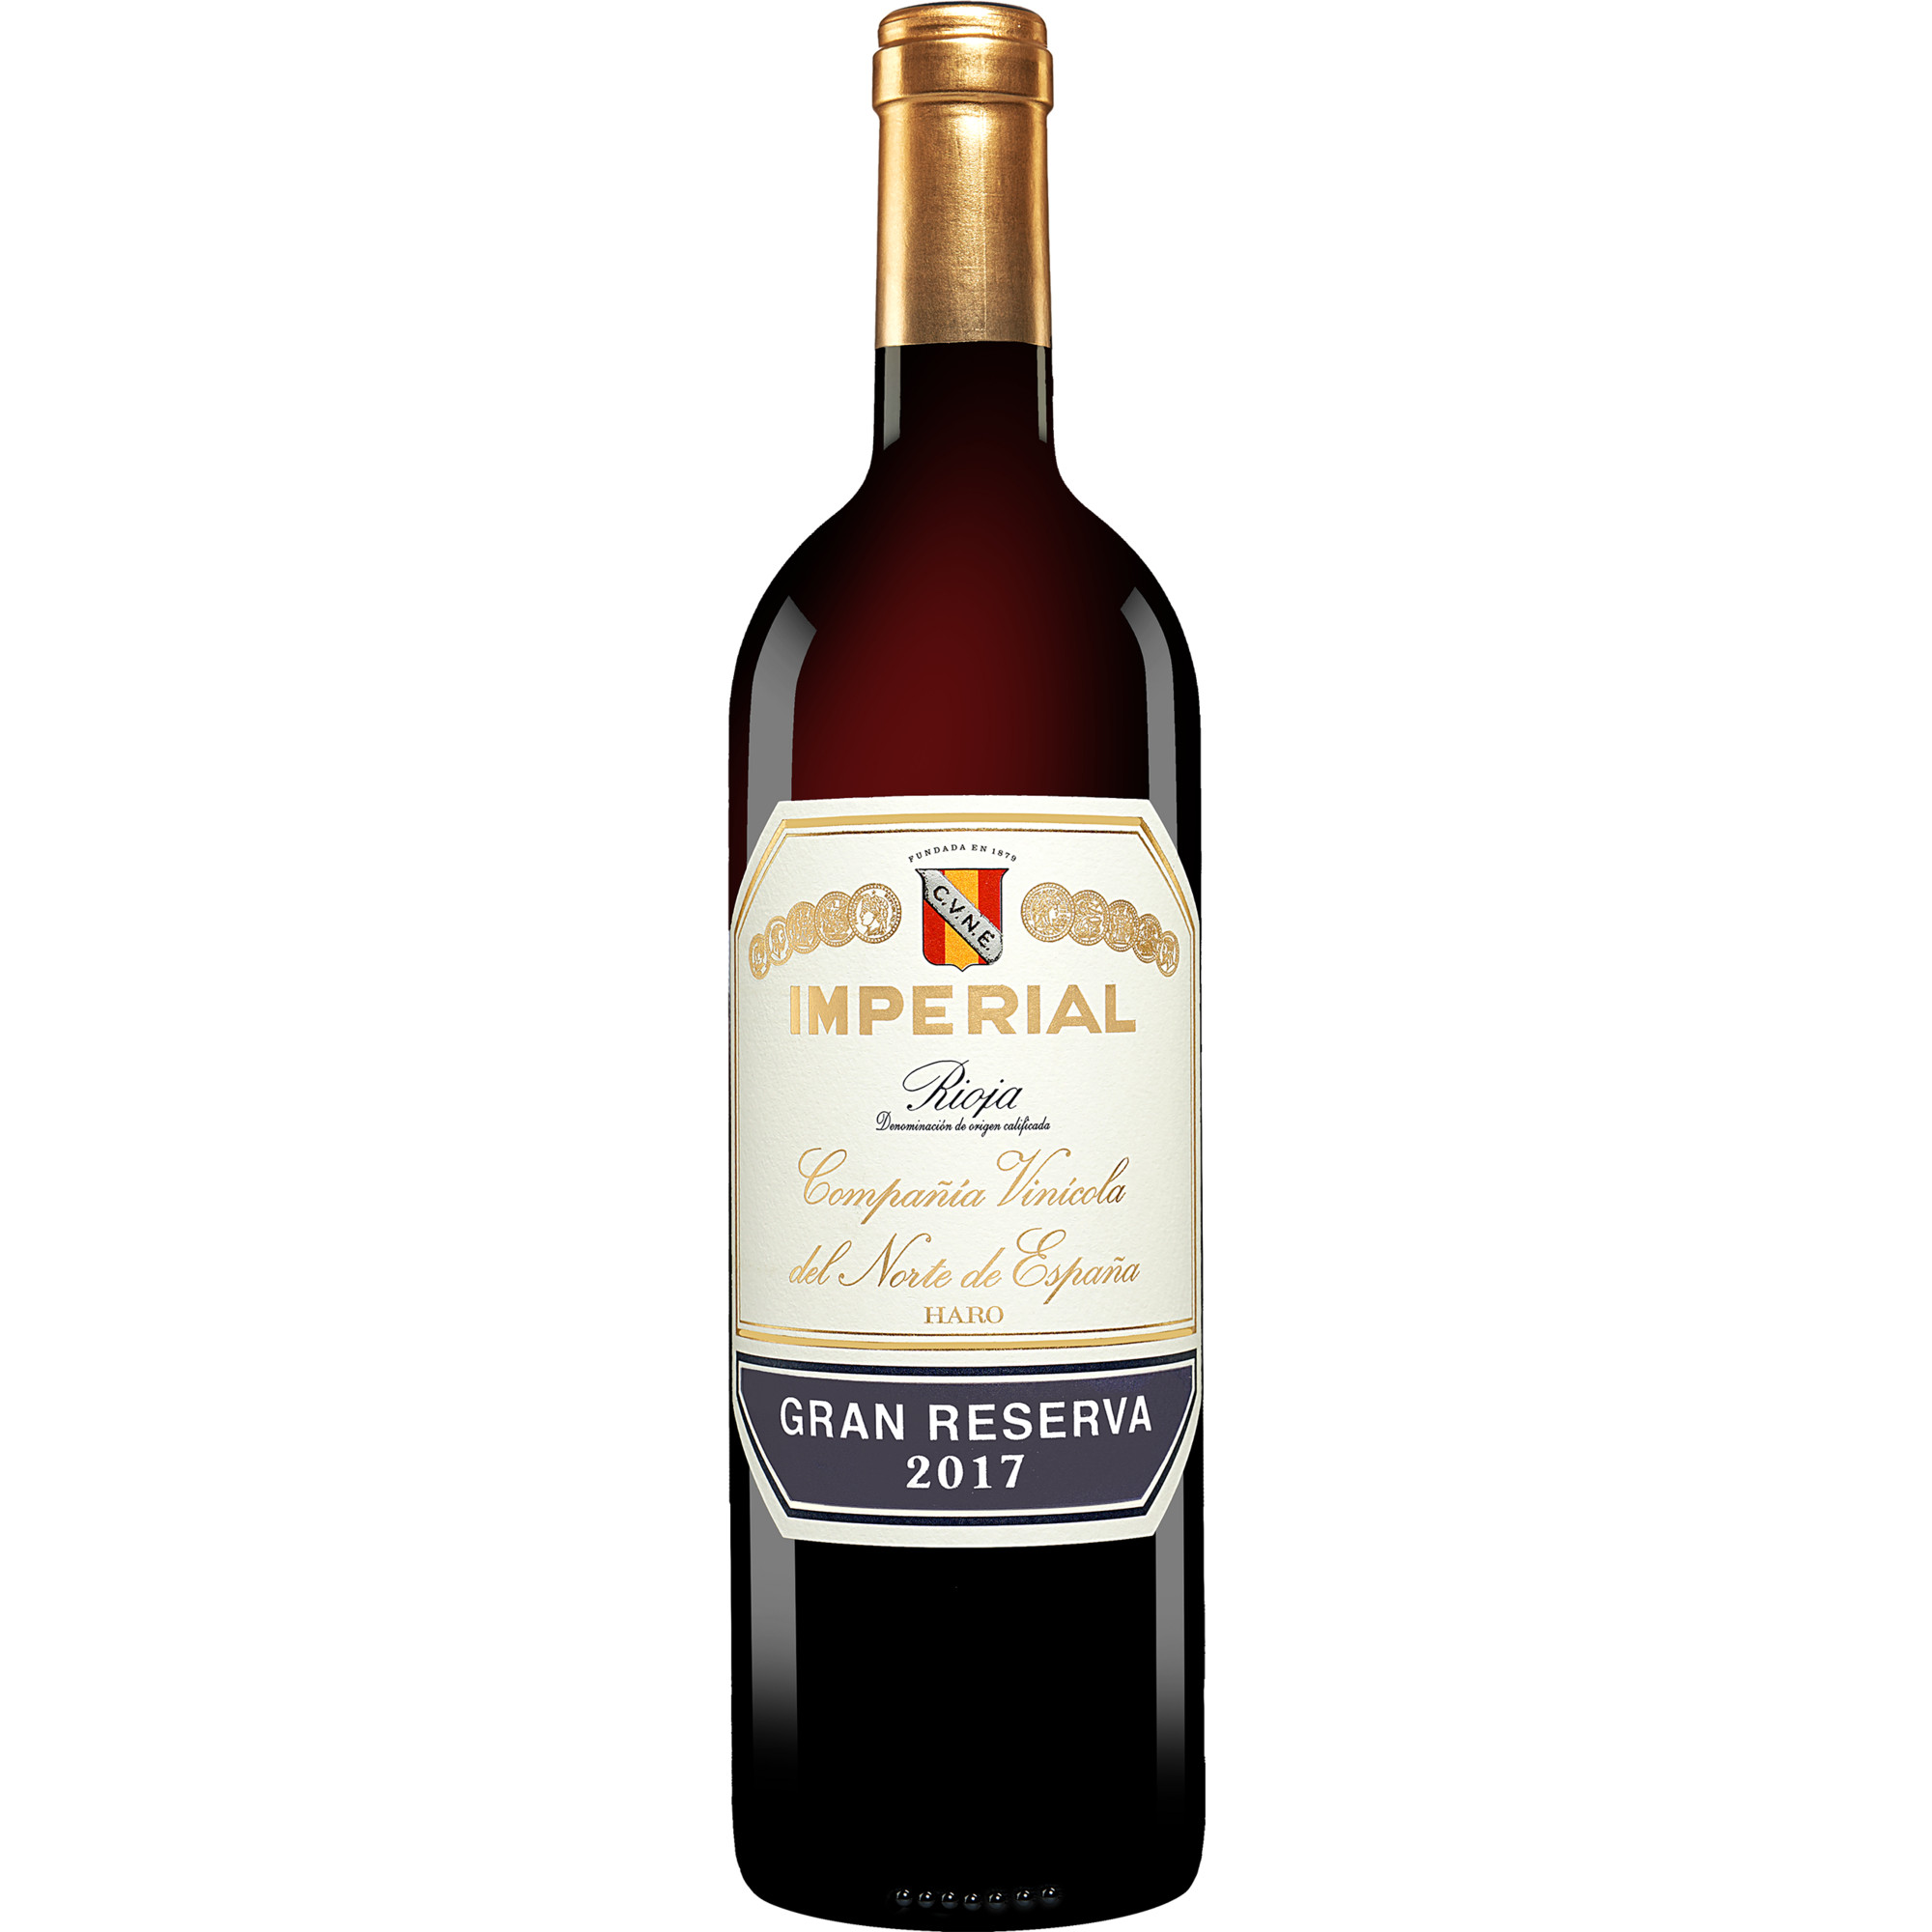 Cune Imperial Gran Reserva 2017  014% Vol. Rotwein Trocken aus Spanien